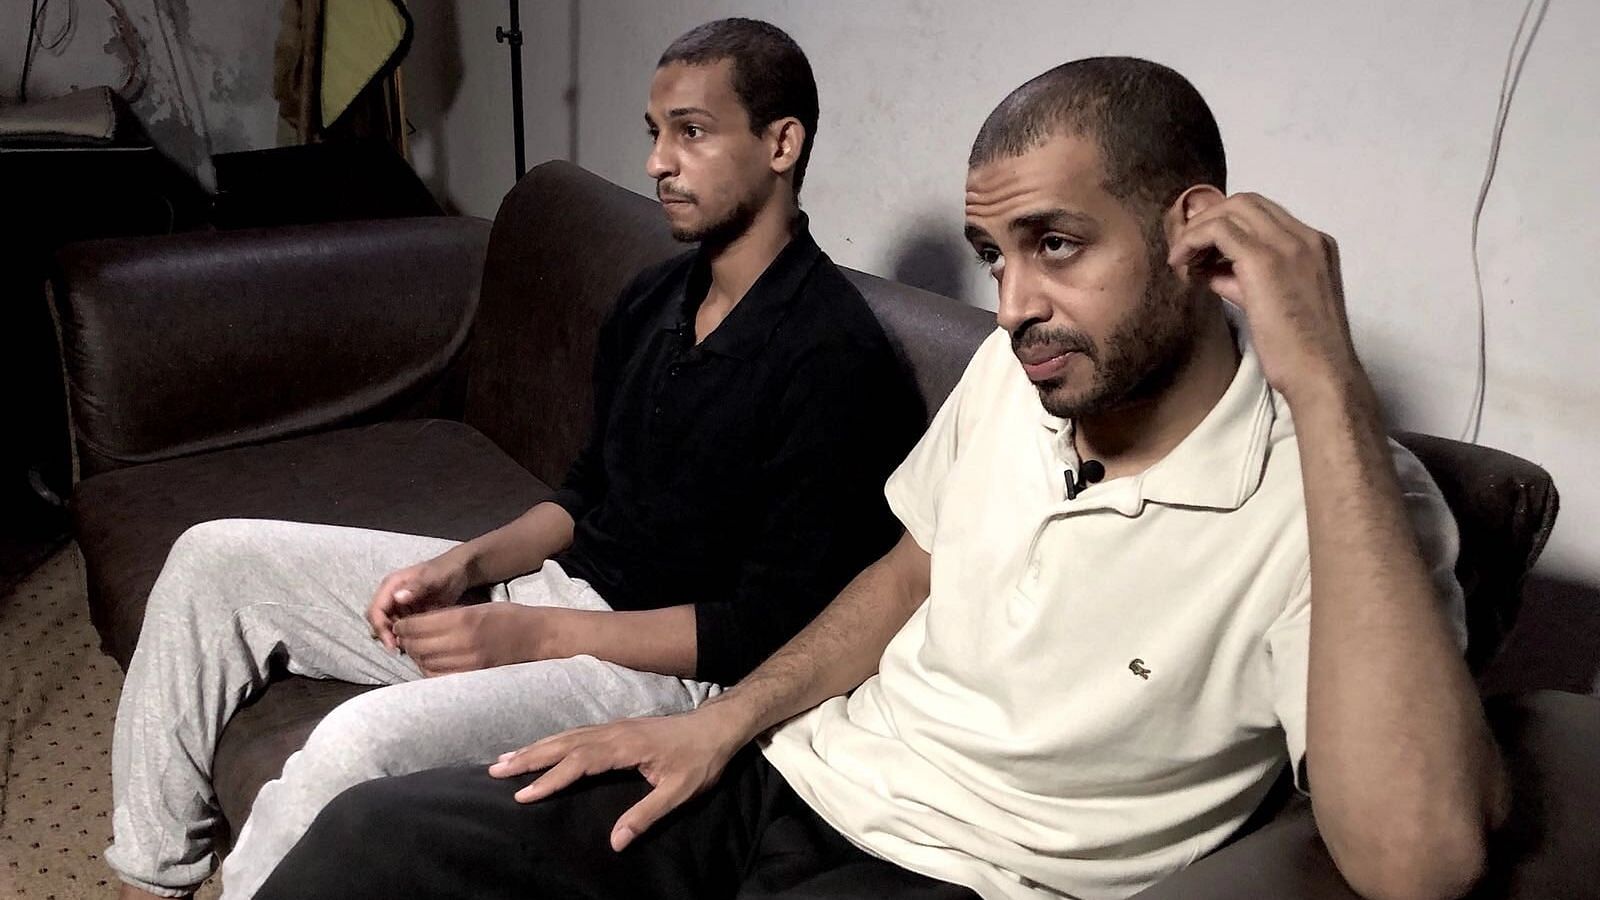 <div class="paragraphs"><p>ISIS terrorists El Shafee Elsheikh (left) with Alexander Kotey.&nbsp;</p></div>